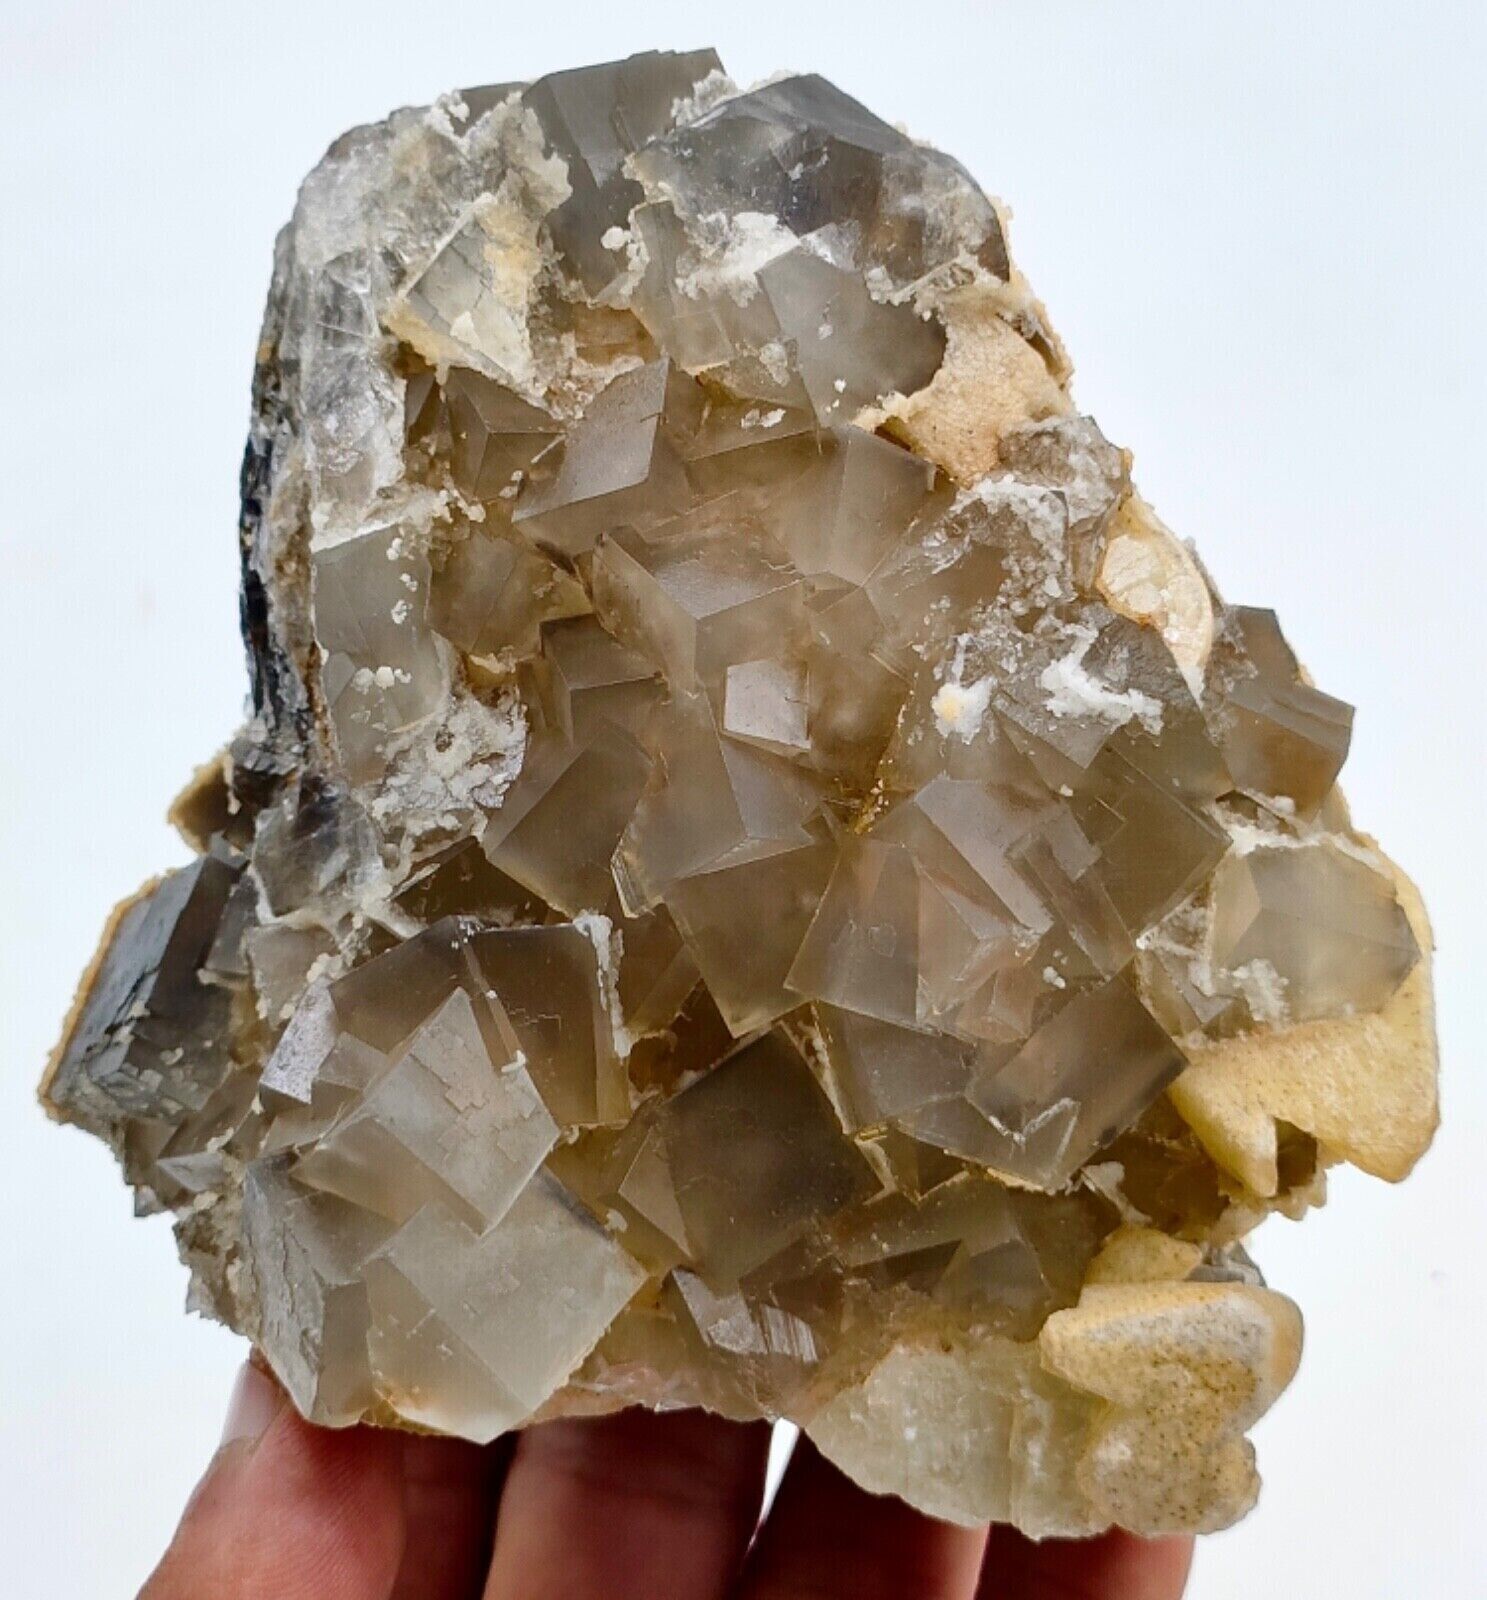 2.5 LB Extraordinary Glassy Cubic Fluorite & Calcite From Pakistan